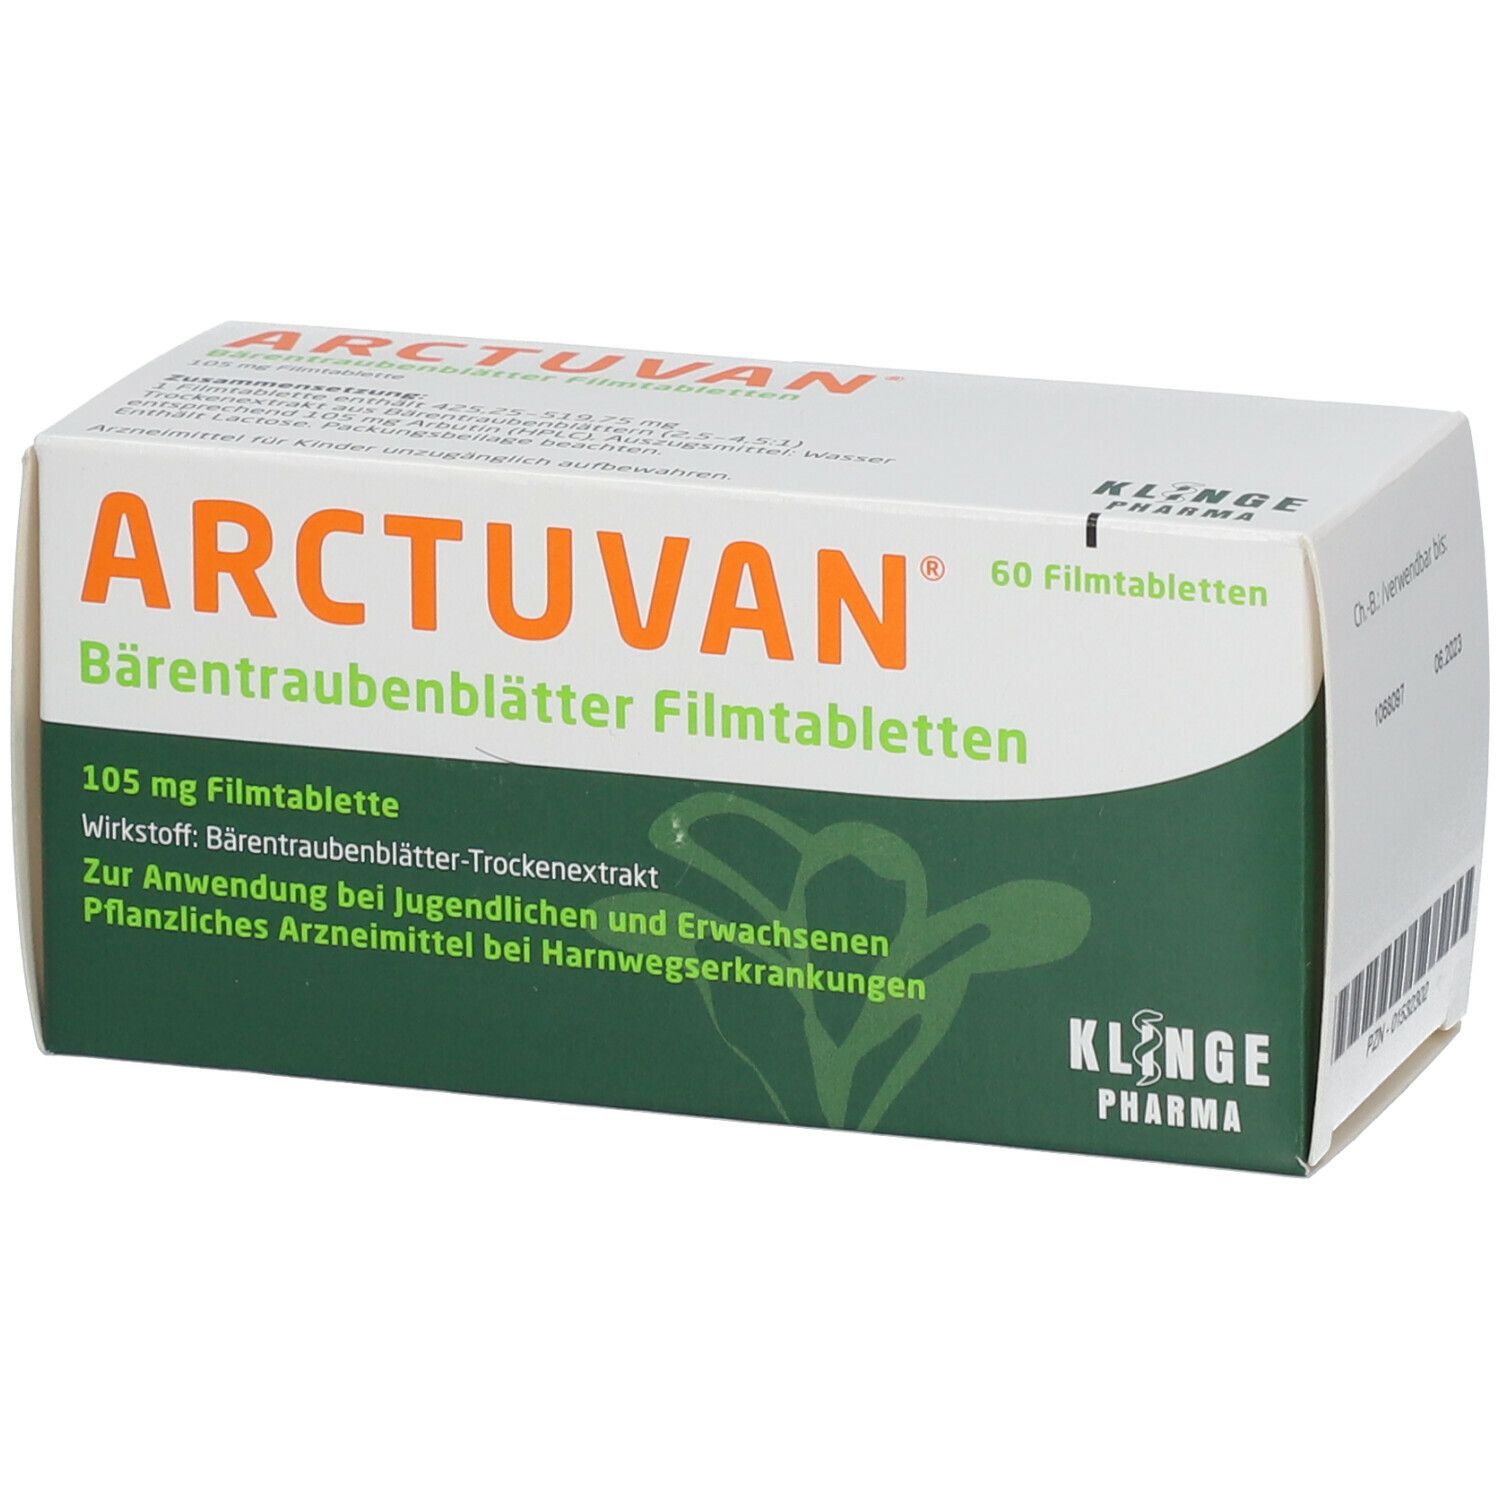 Arctuvan® Bärentraubenblätter Filmtabletten